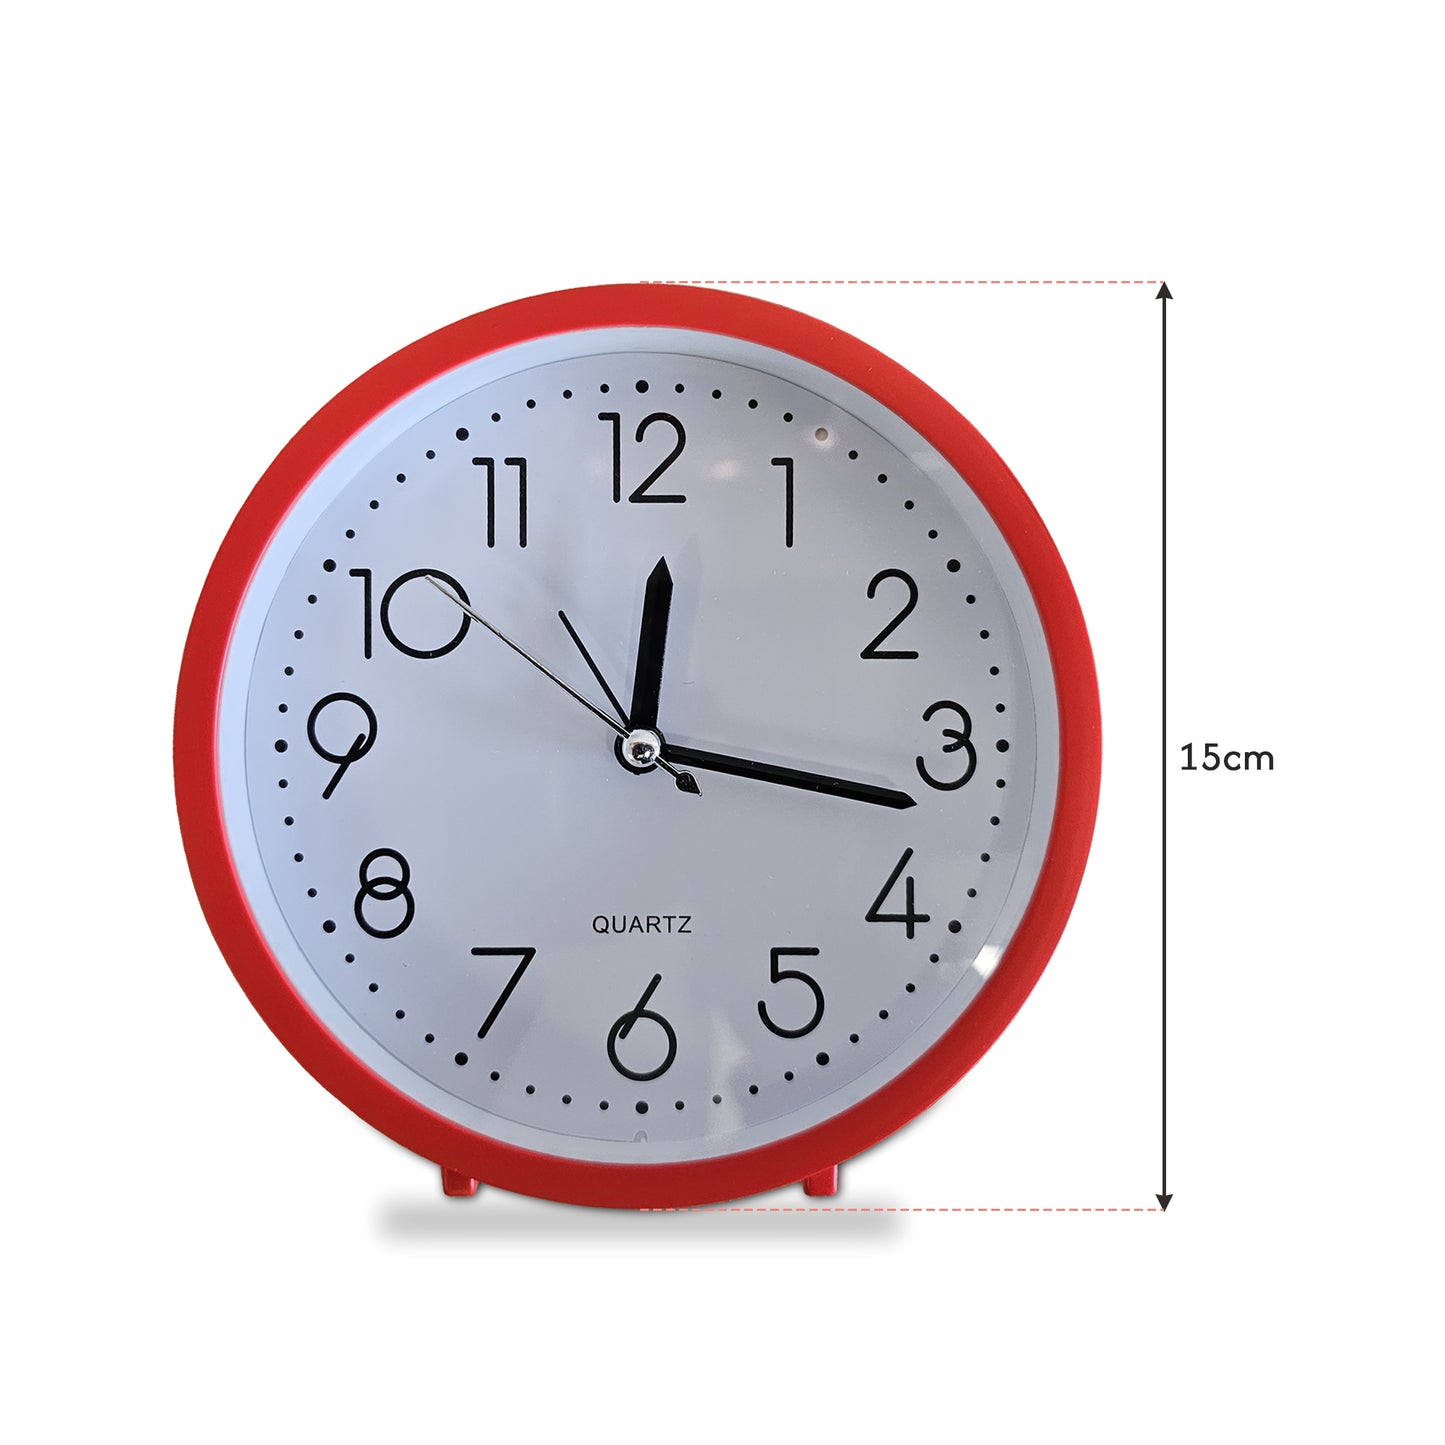 battery alarm clock size image